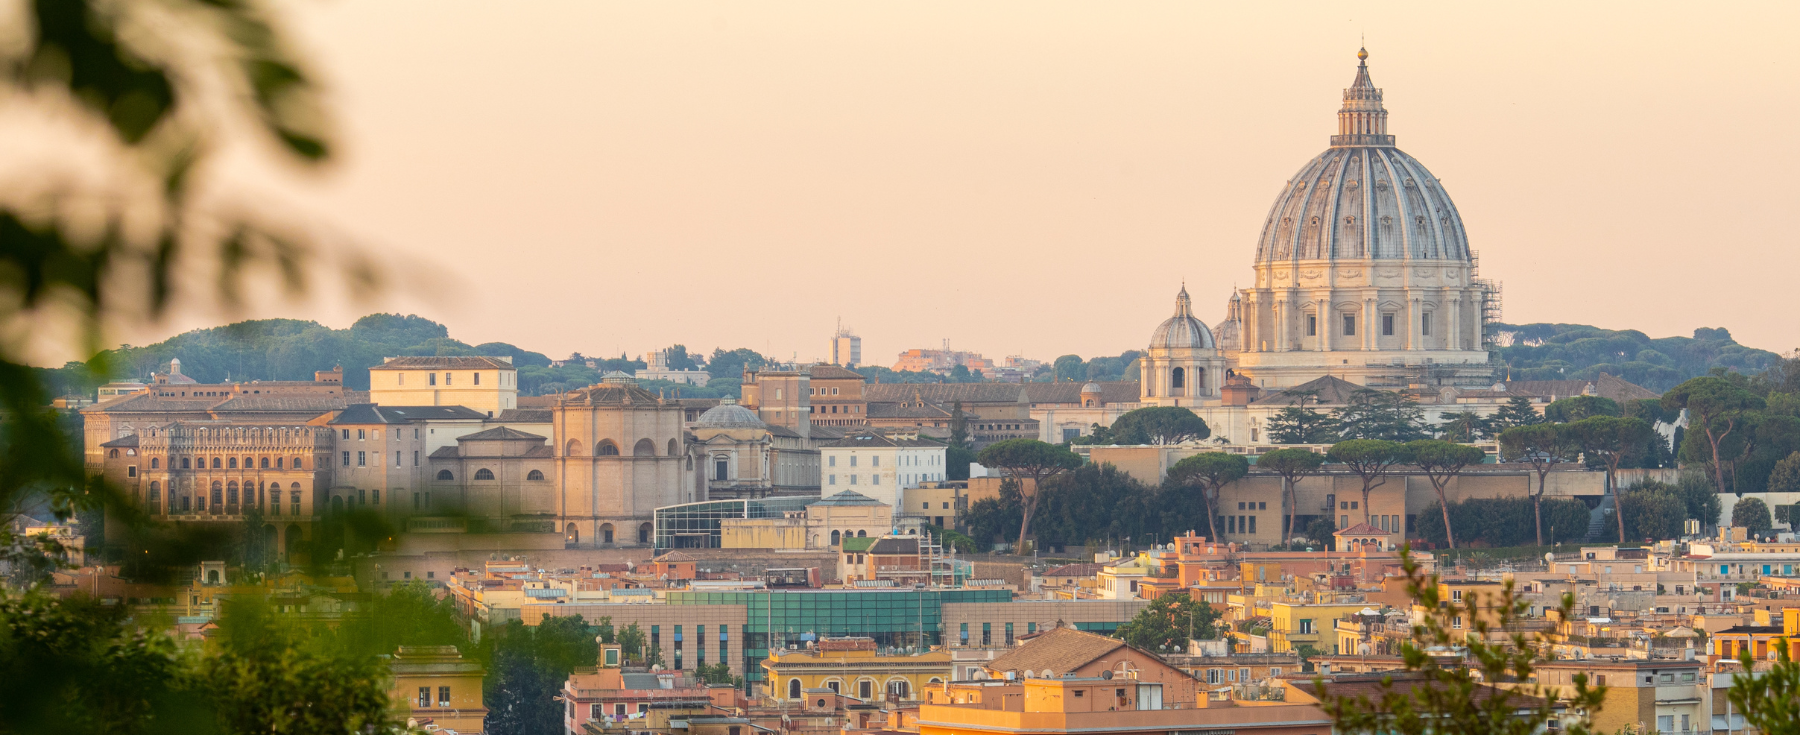 Rome's skyline captured from afar.